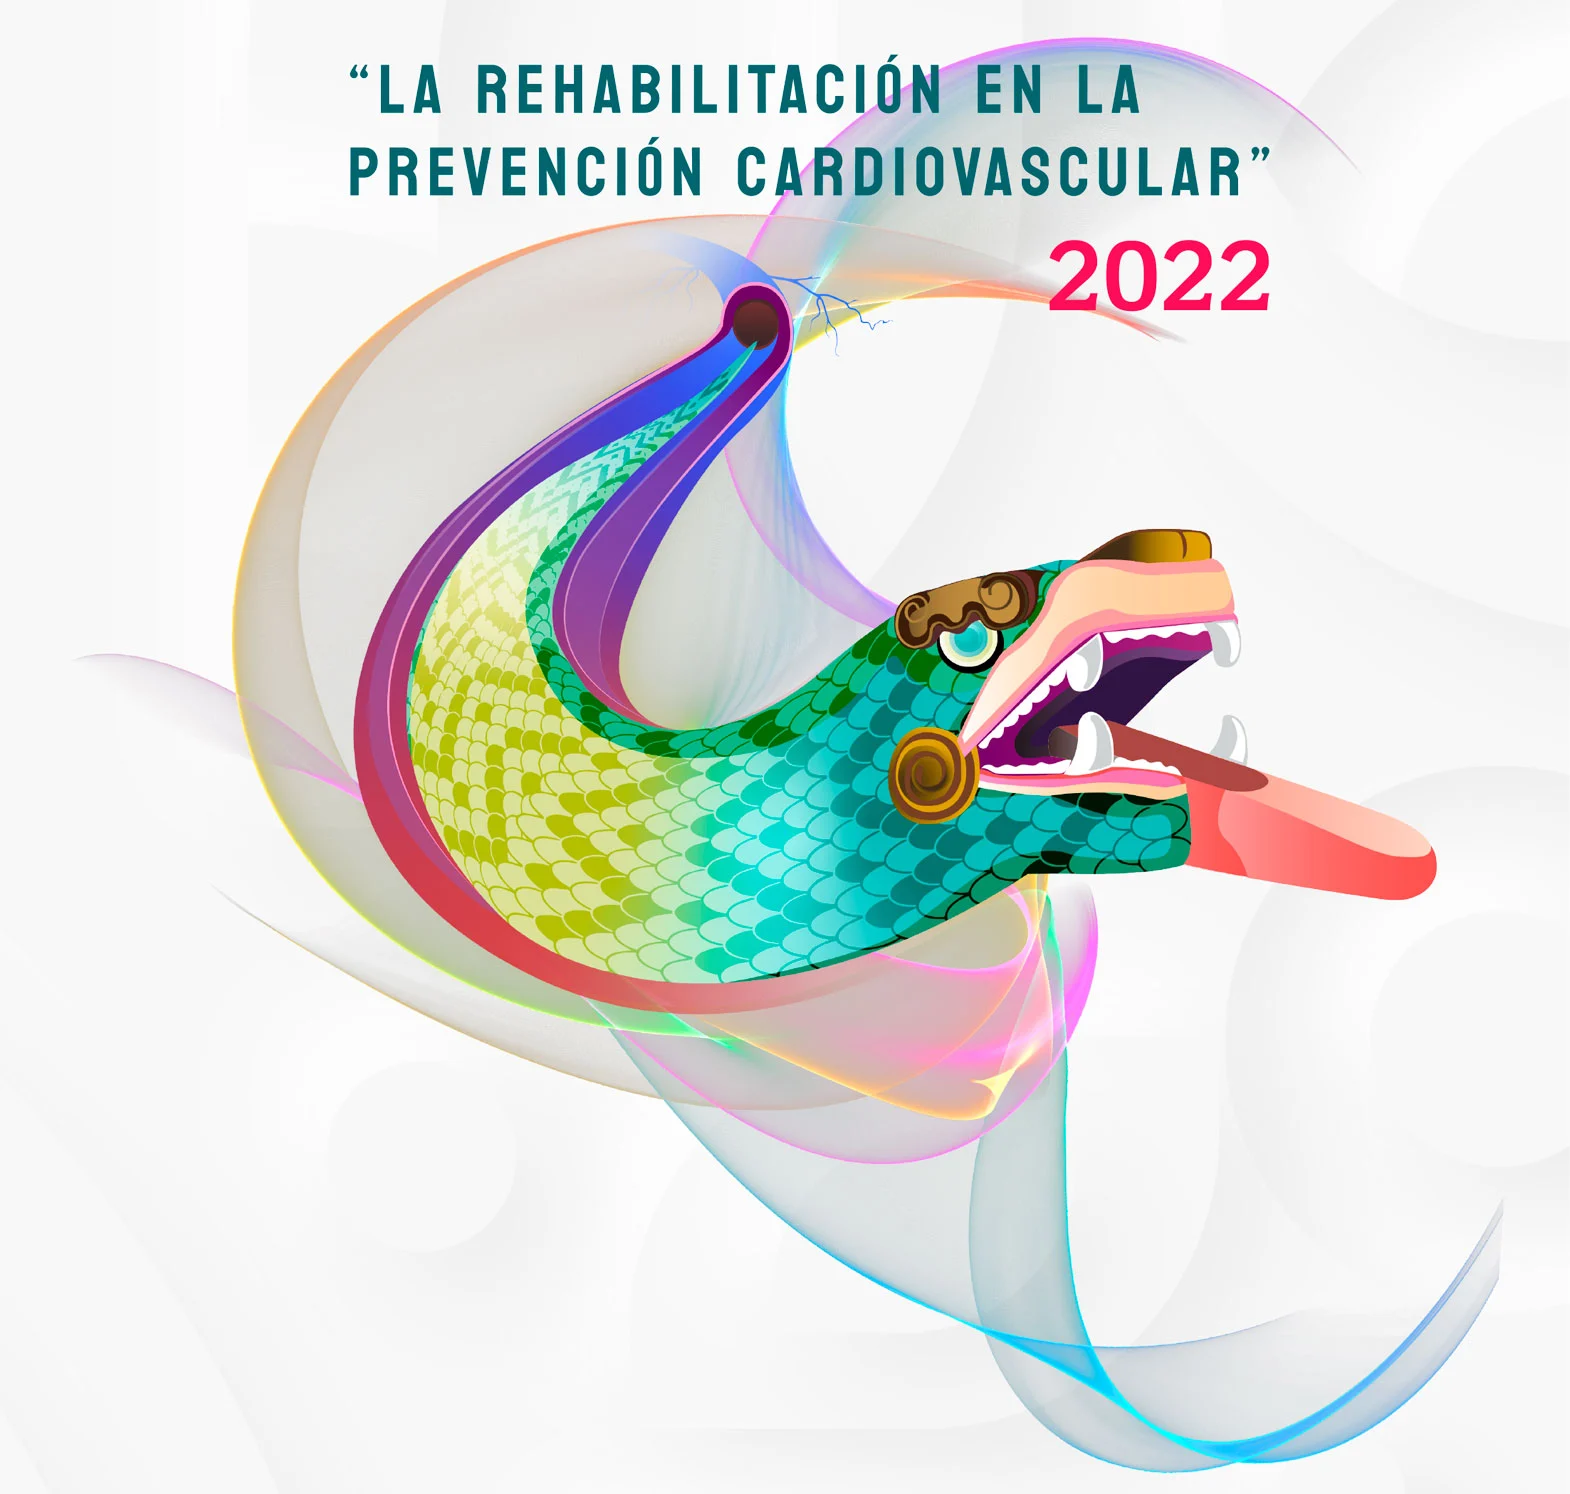 Diseño AMPAC Reunión Mérida 2022